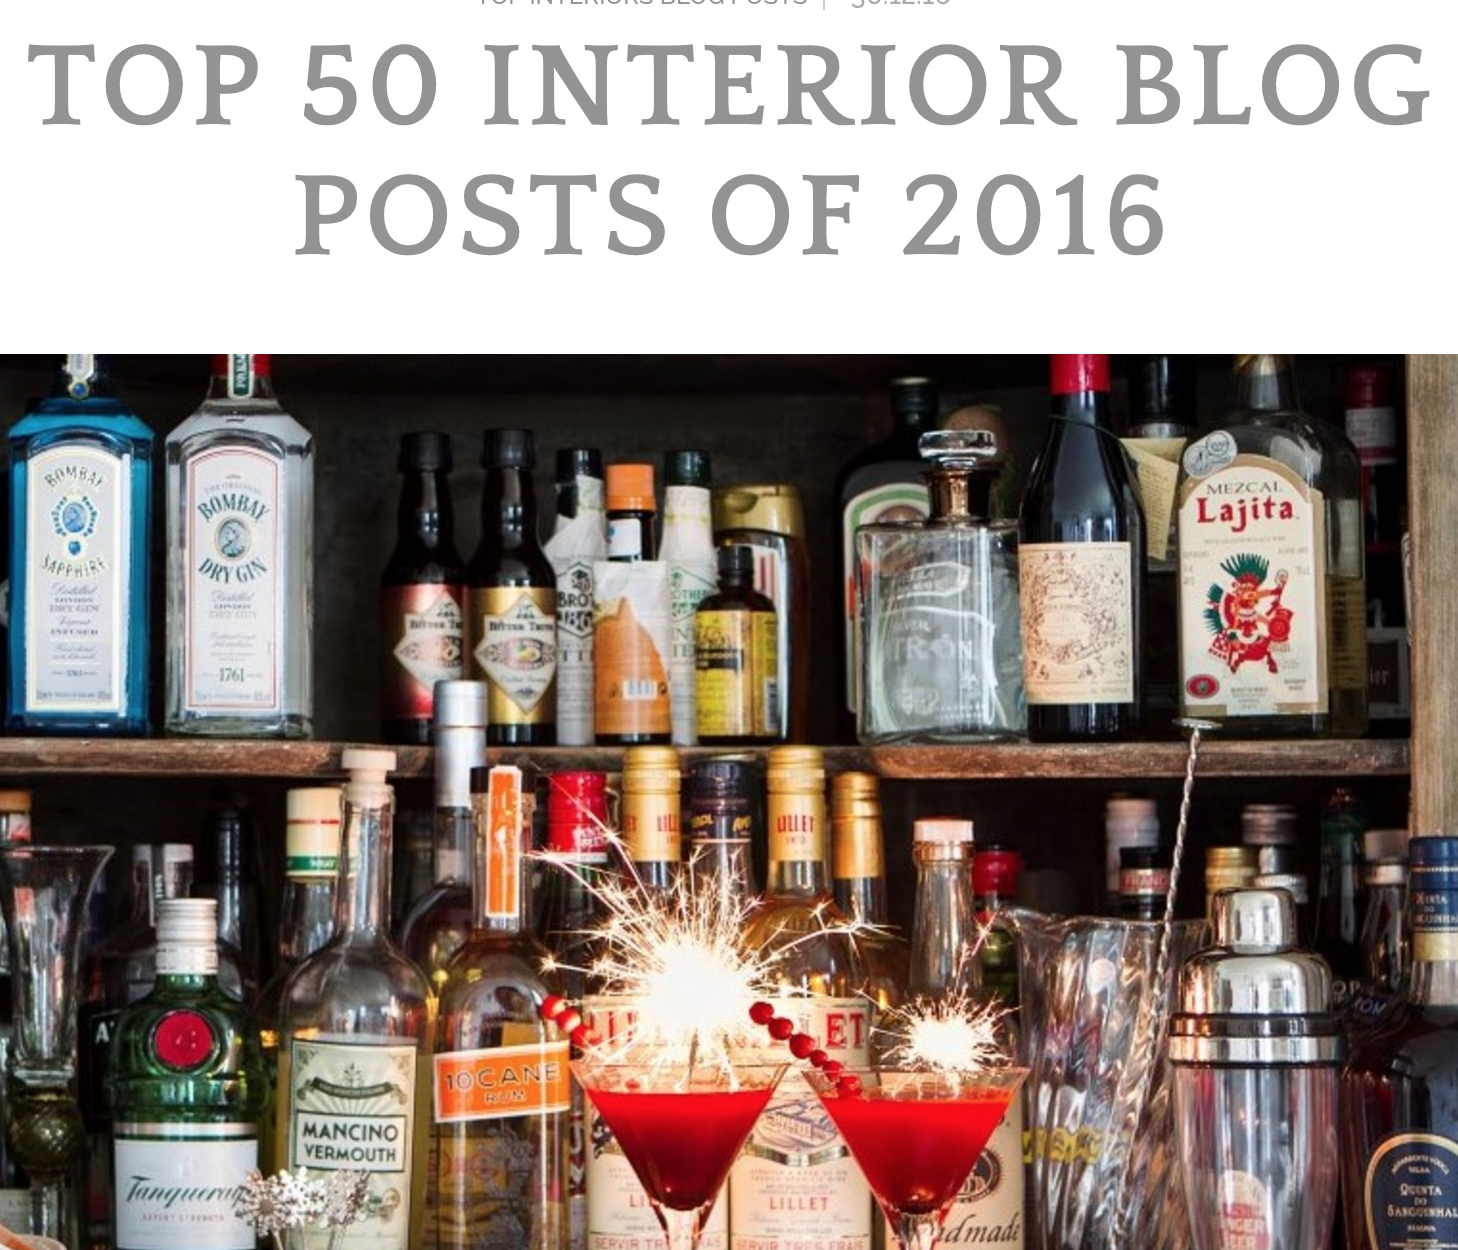 Friday Inspo - Top 50 Interior Posts!